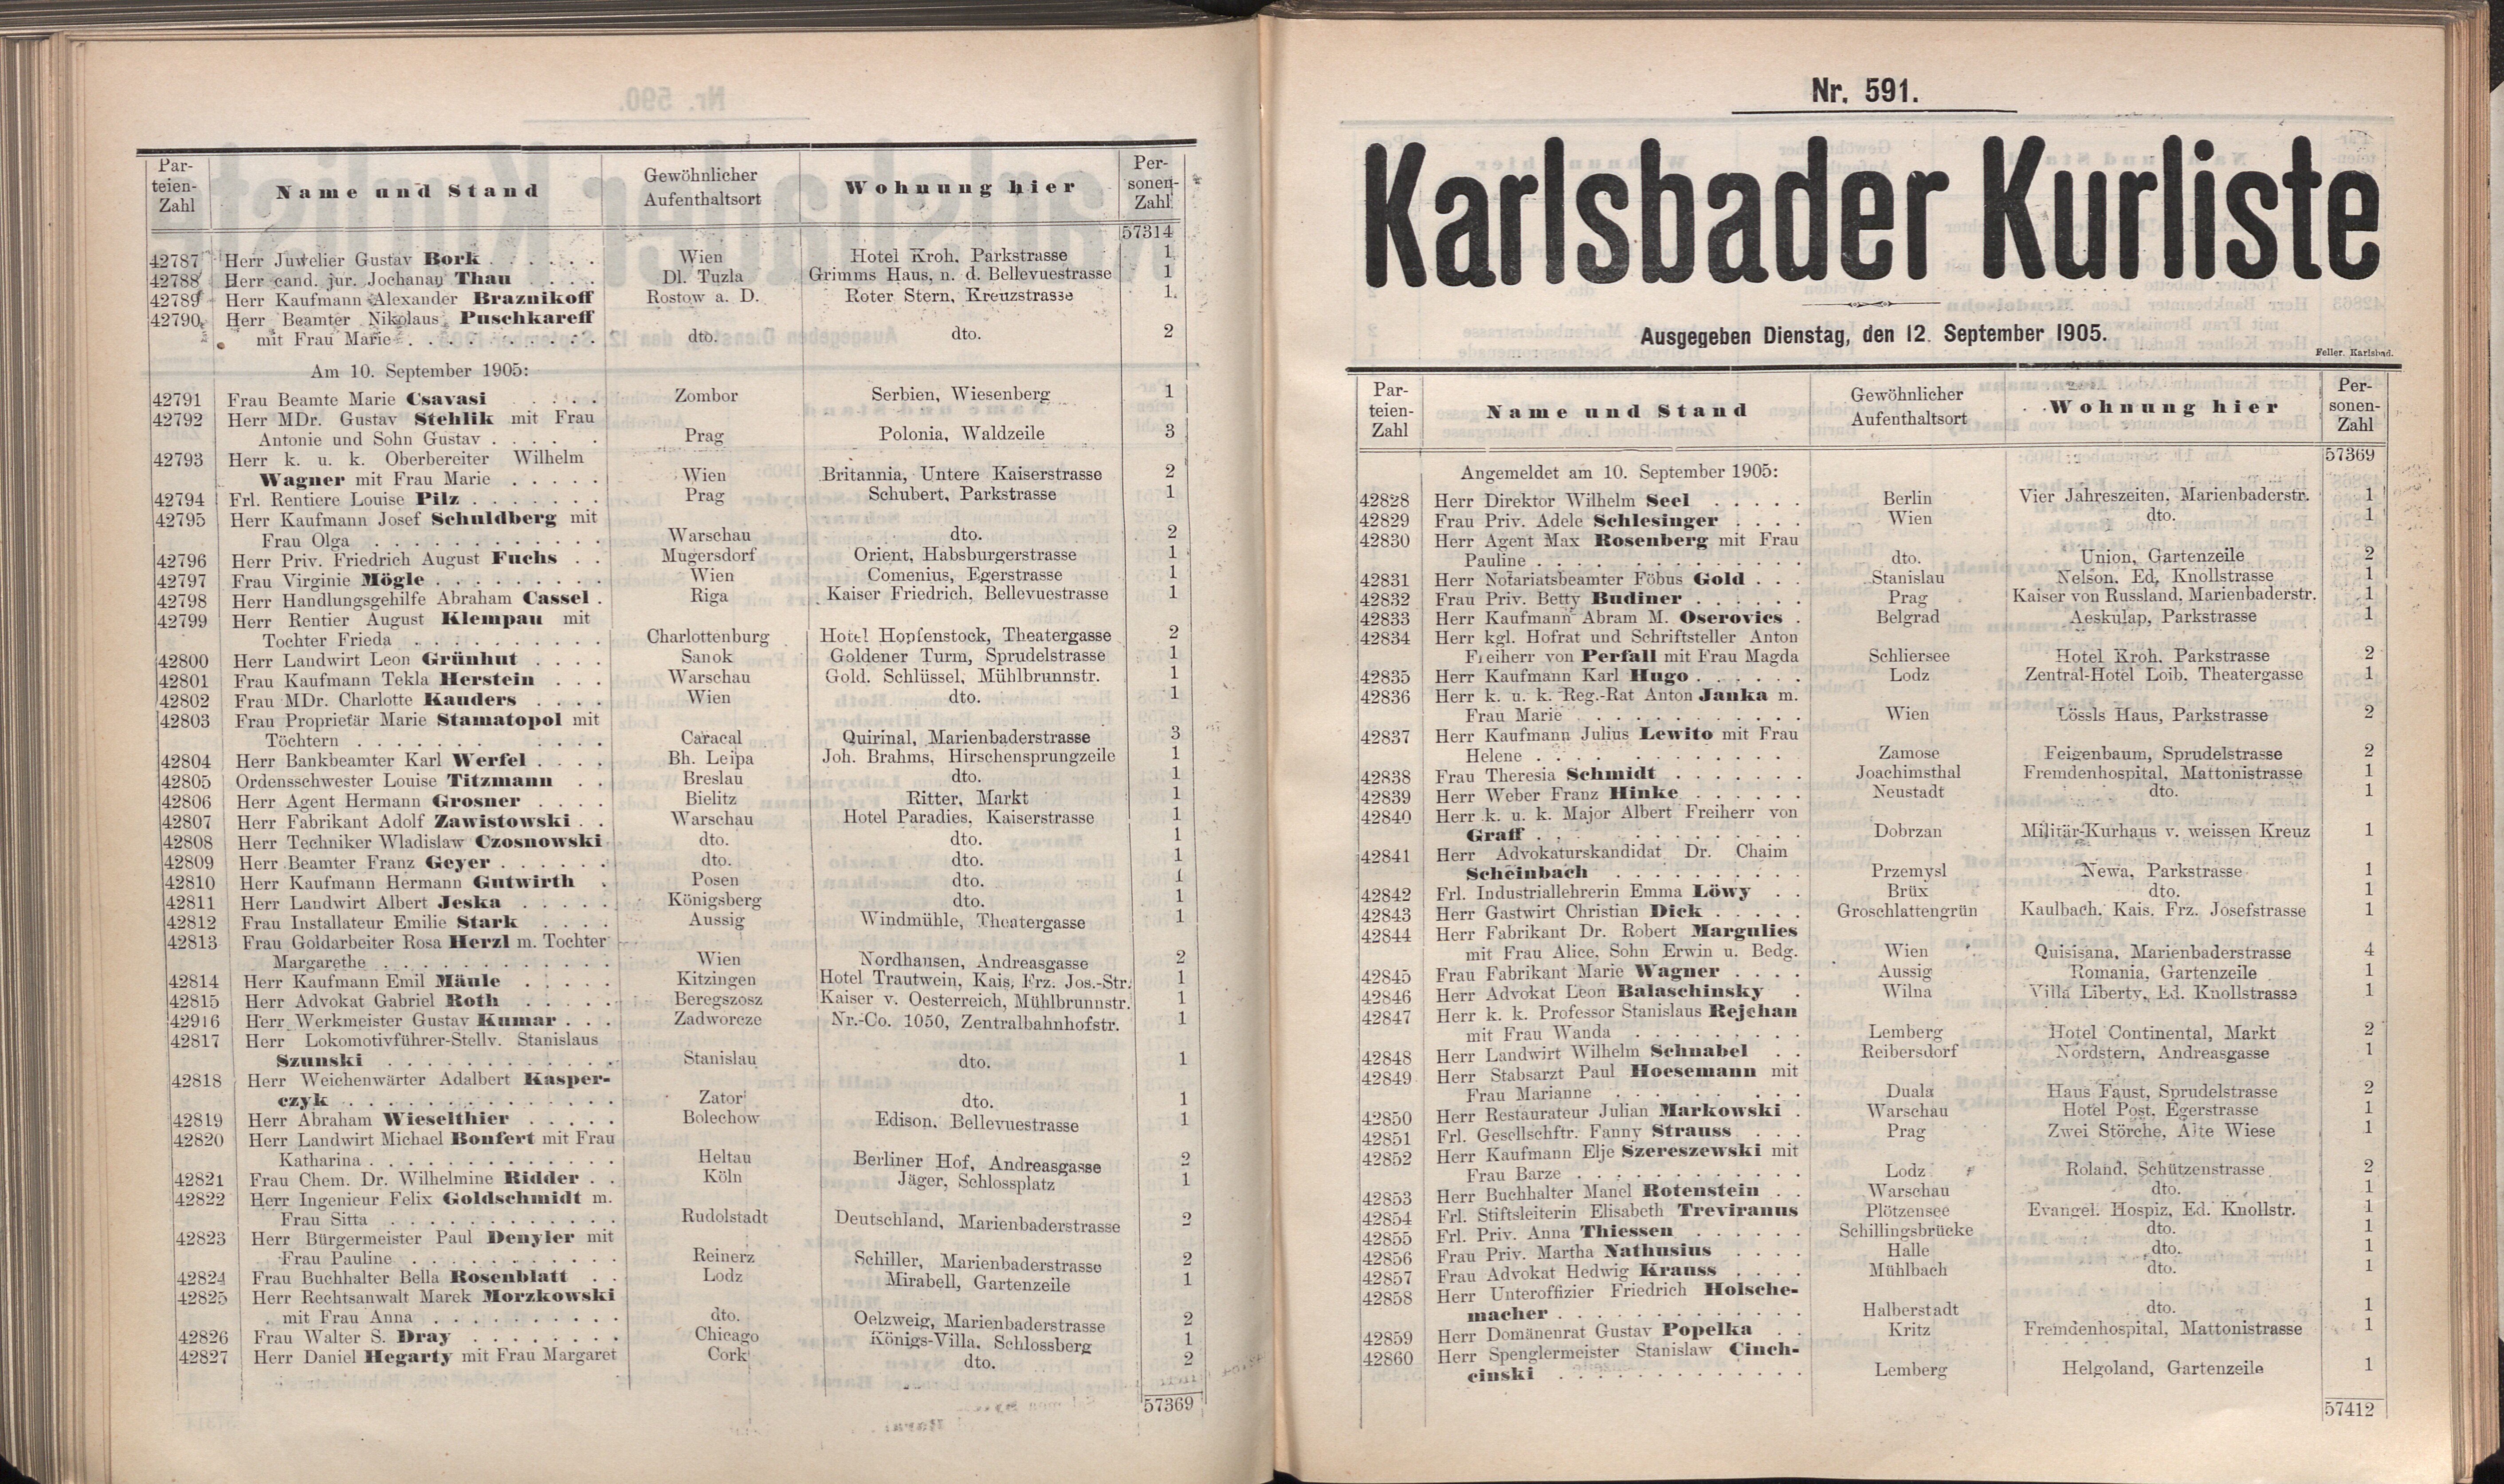 613. soap-kv_knihovna_karlsbader-kurliste-1905_6140